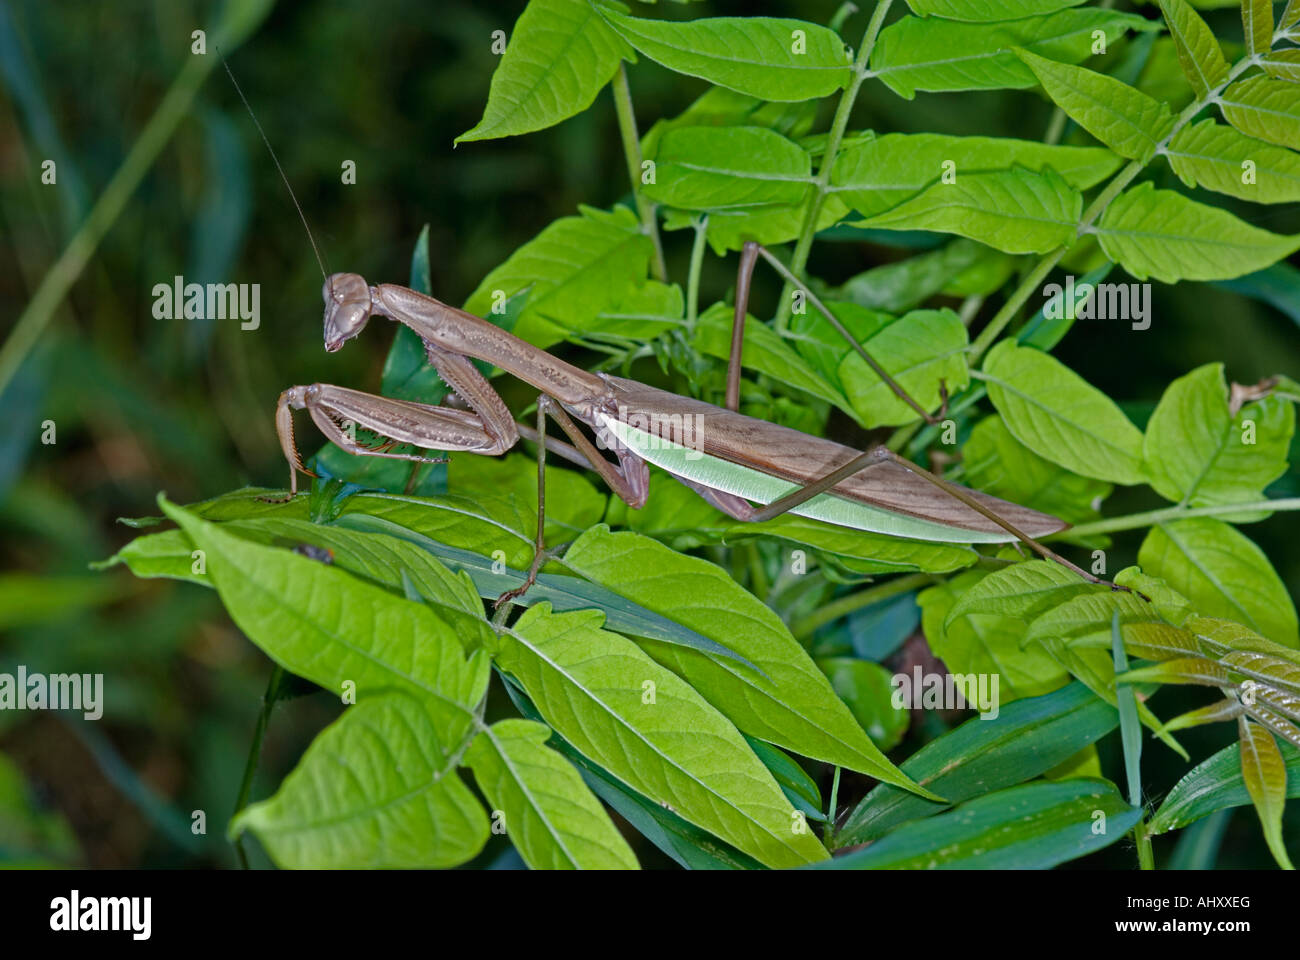 Chinese Mantid, insect, Tenodera aridifolia Stock Photo